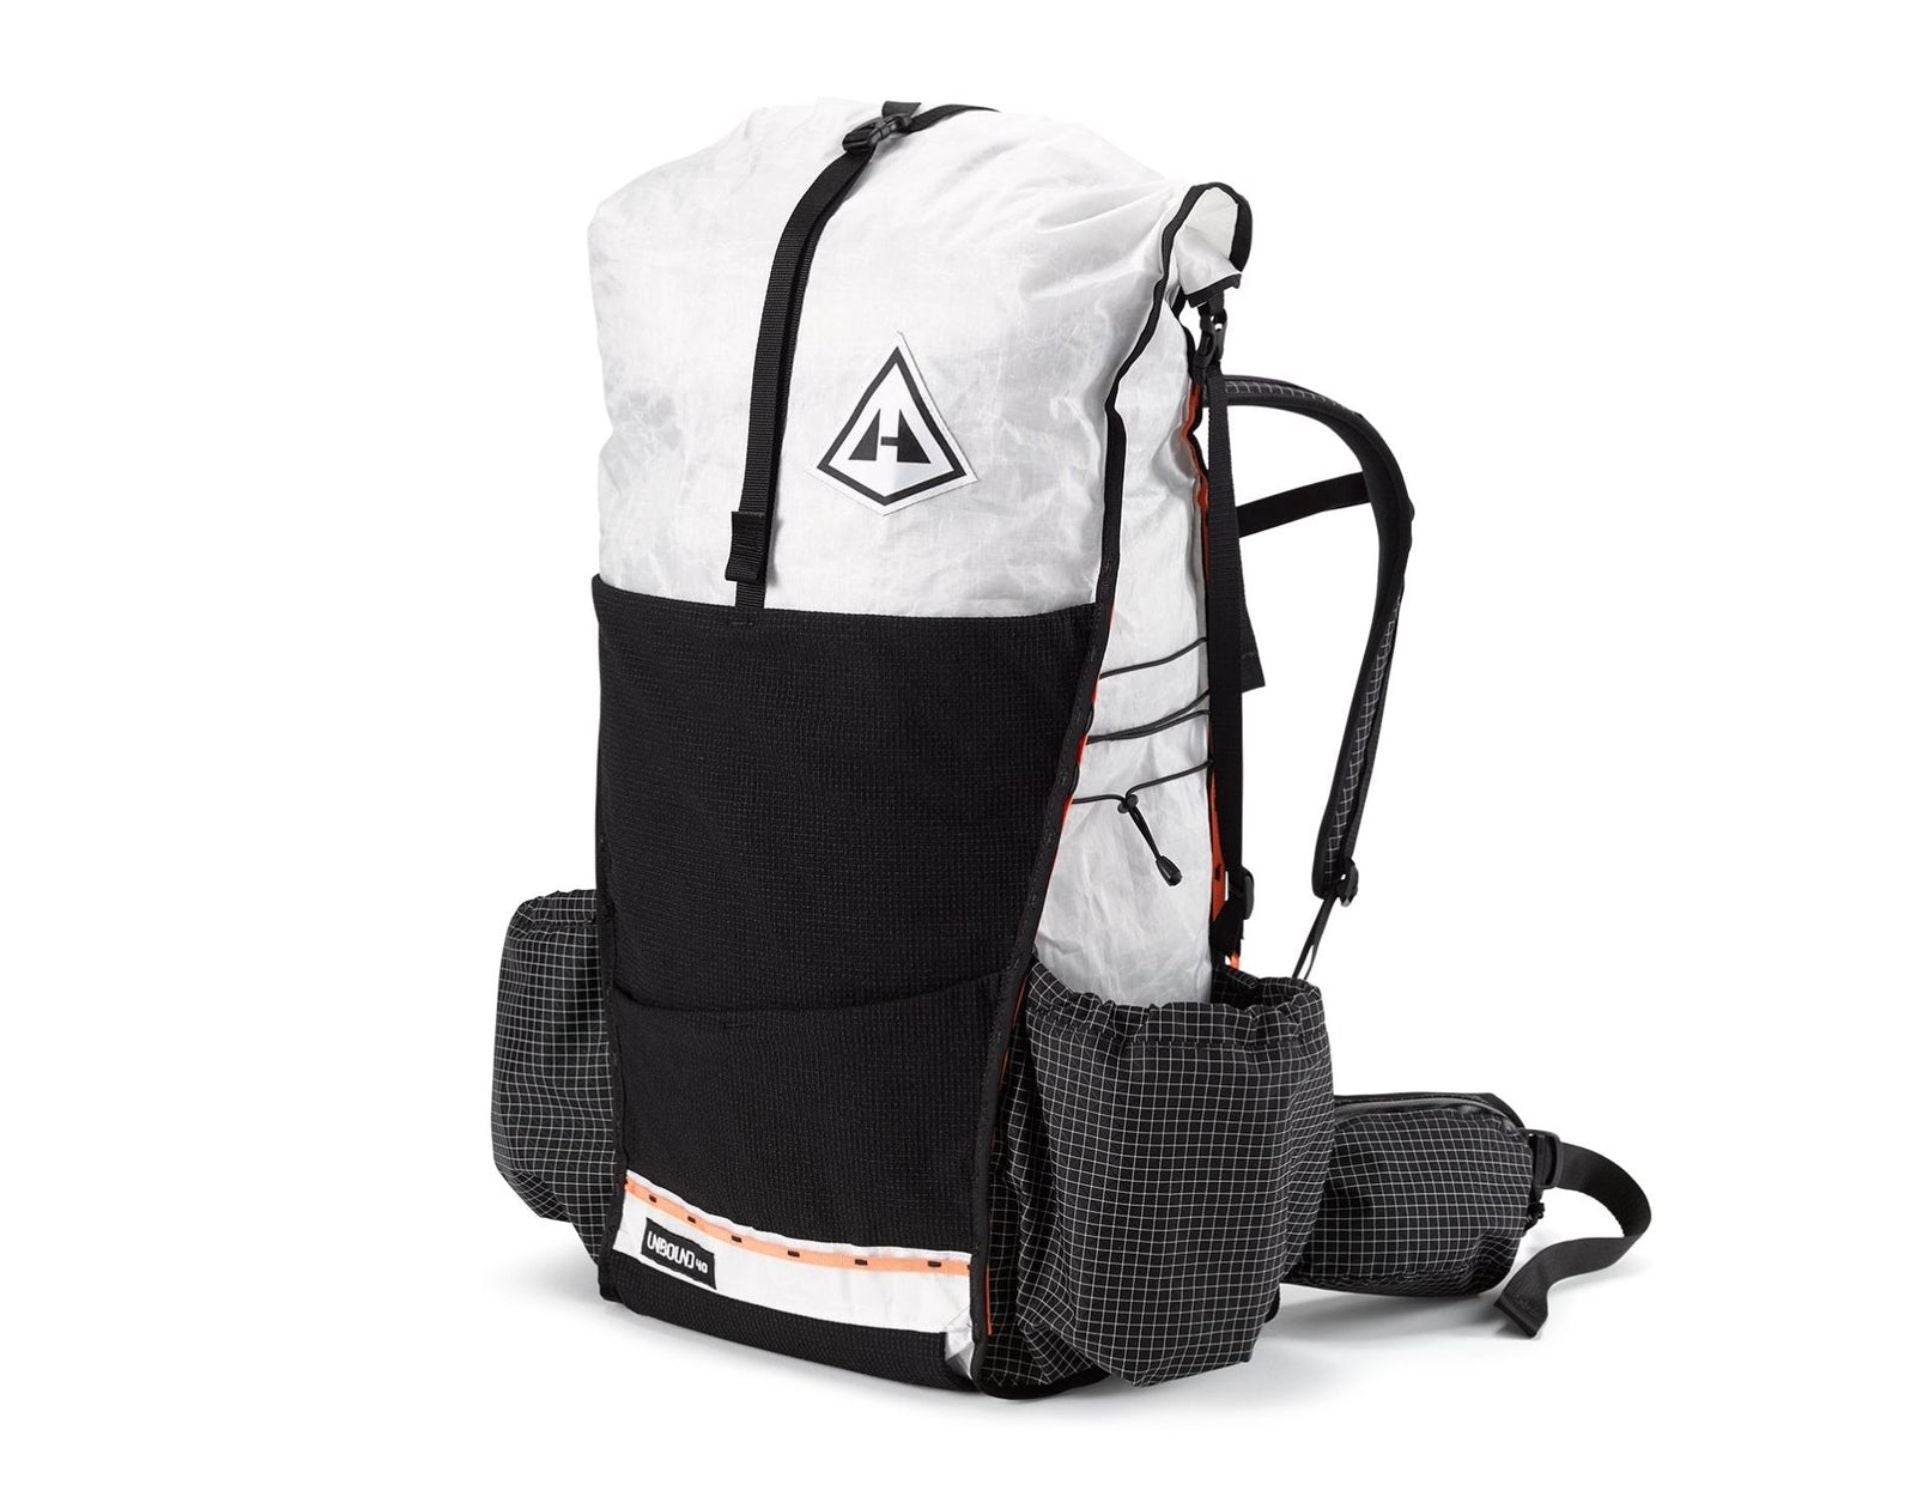 Ultralight Backpacks - Made with Dyneema